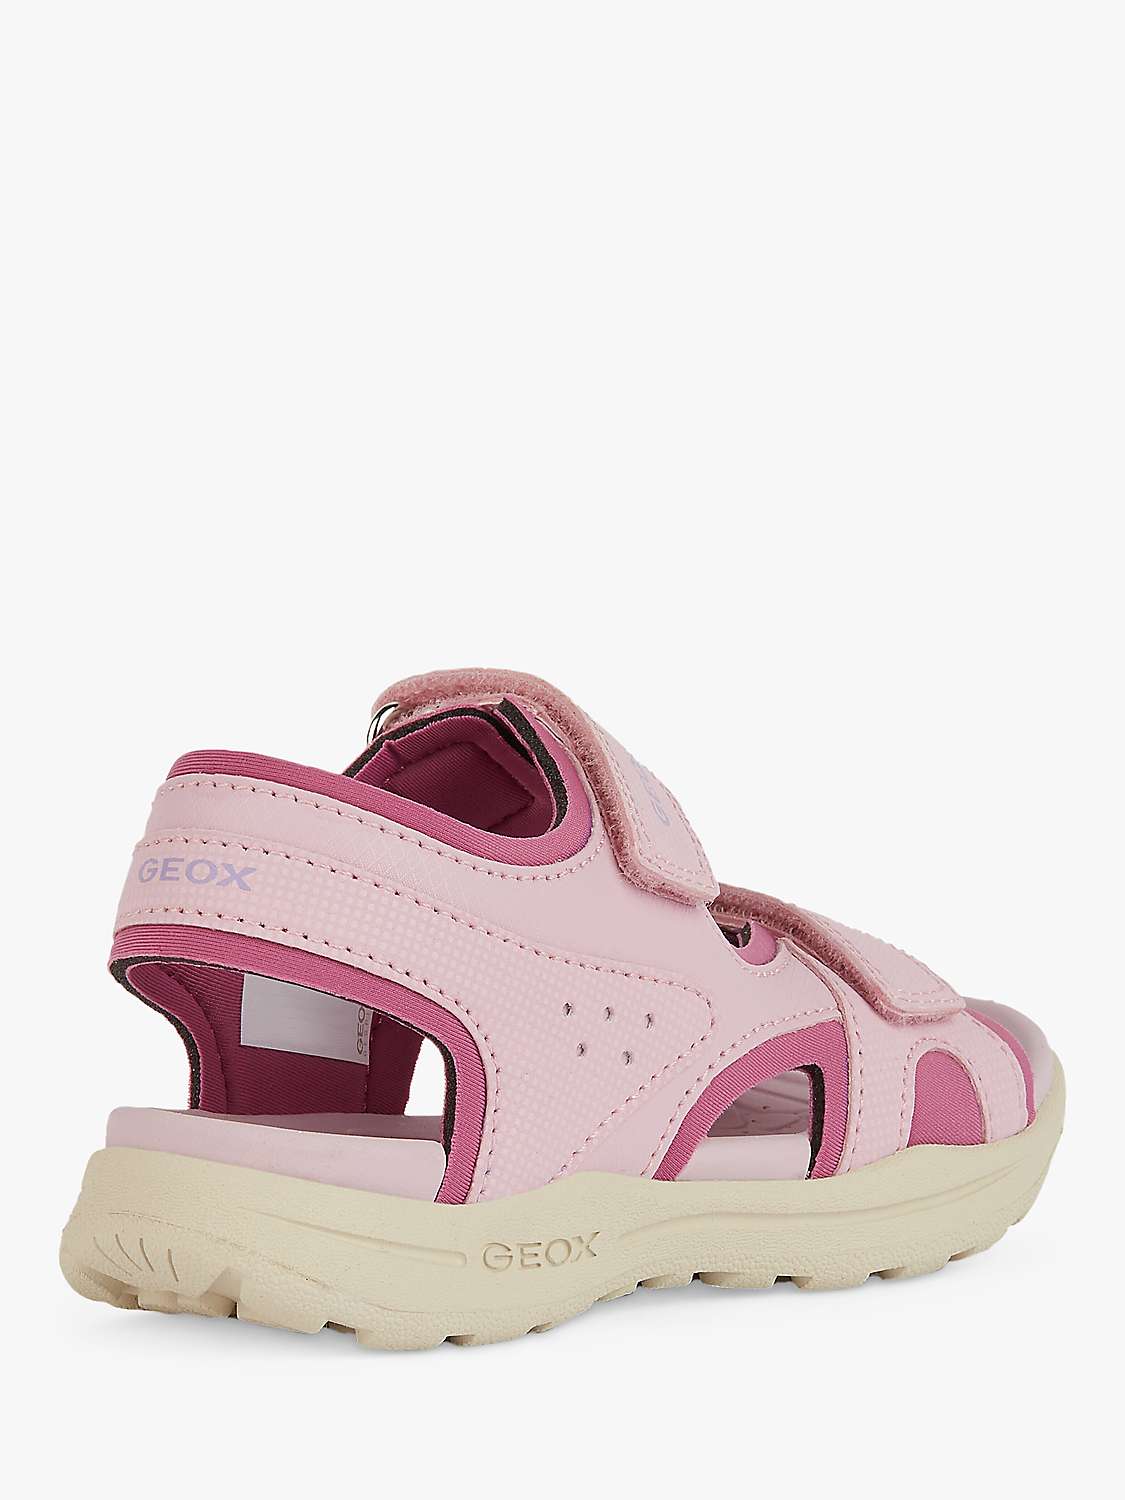 Buy Geox Kids' Vaniett Sandals Online at johnlewis.com